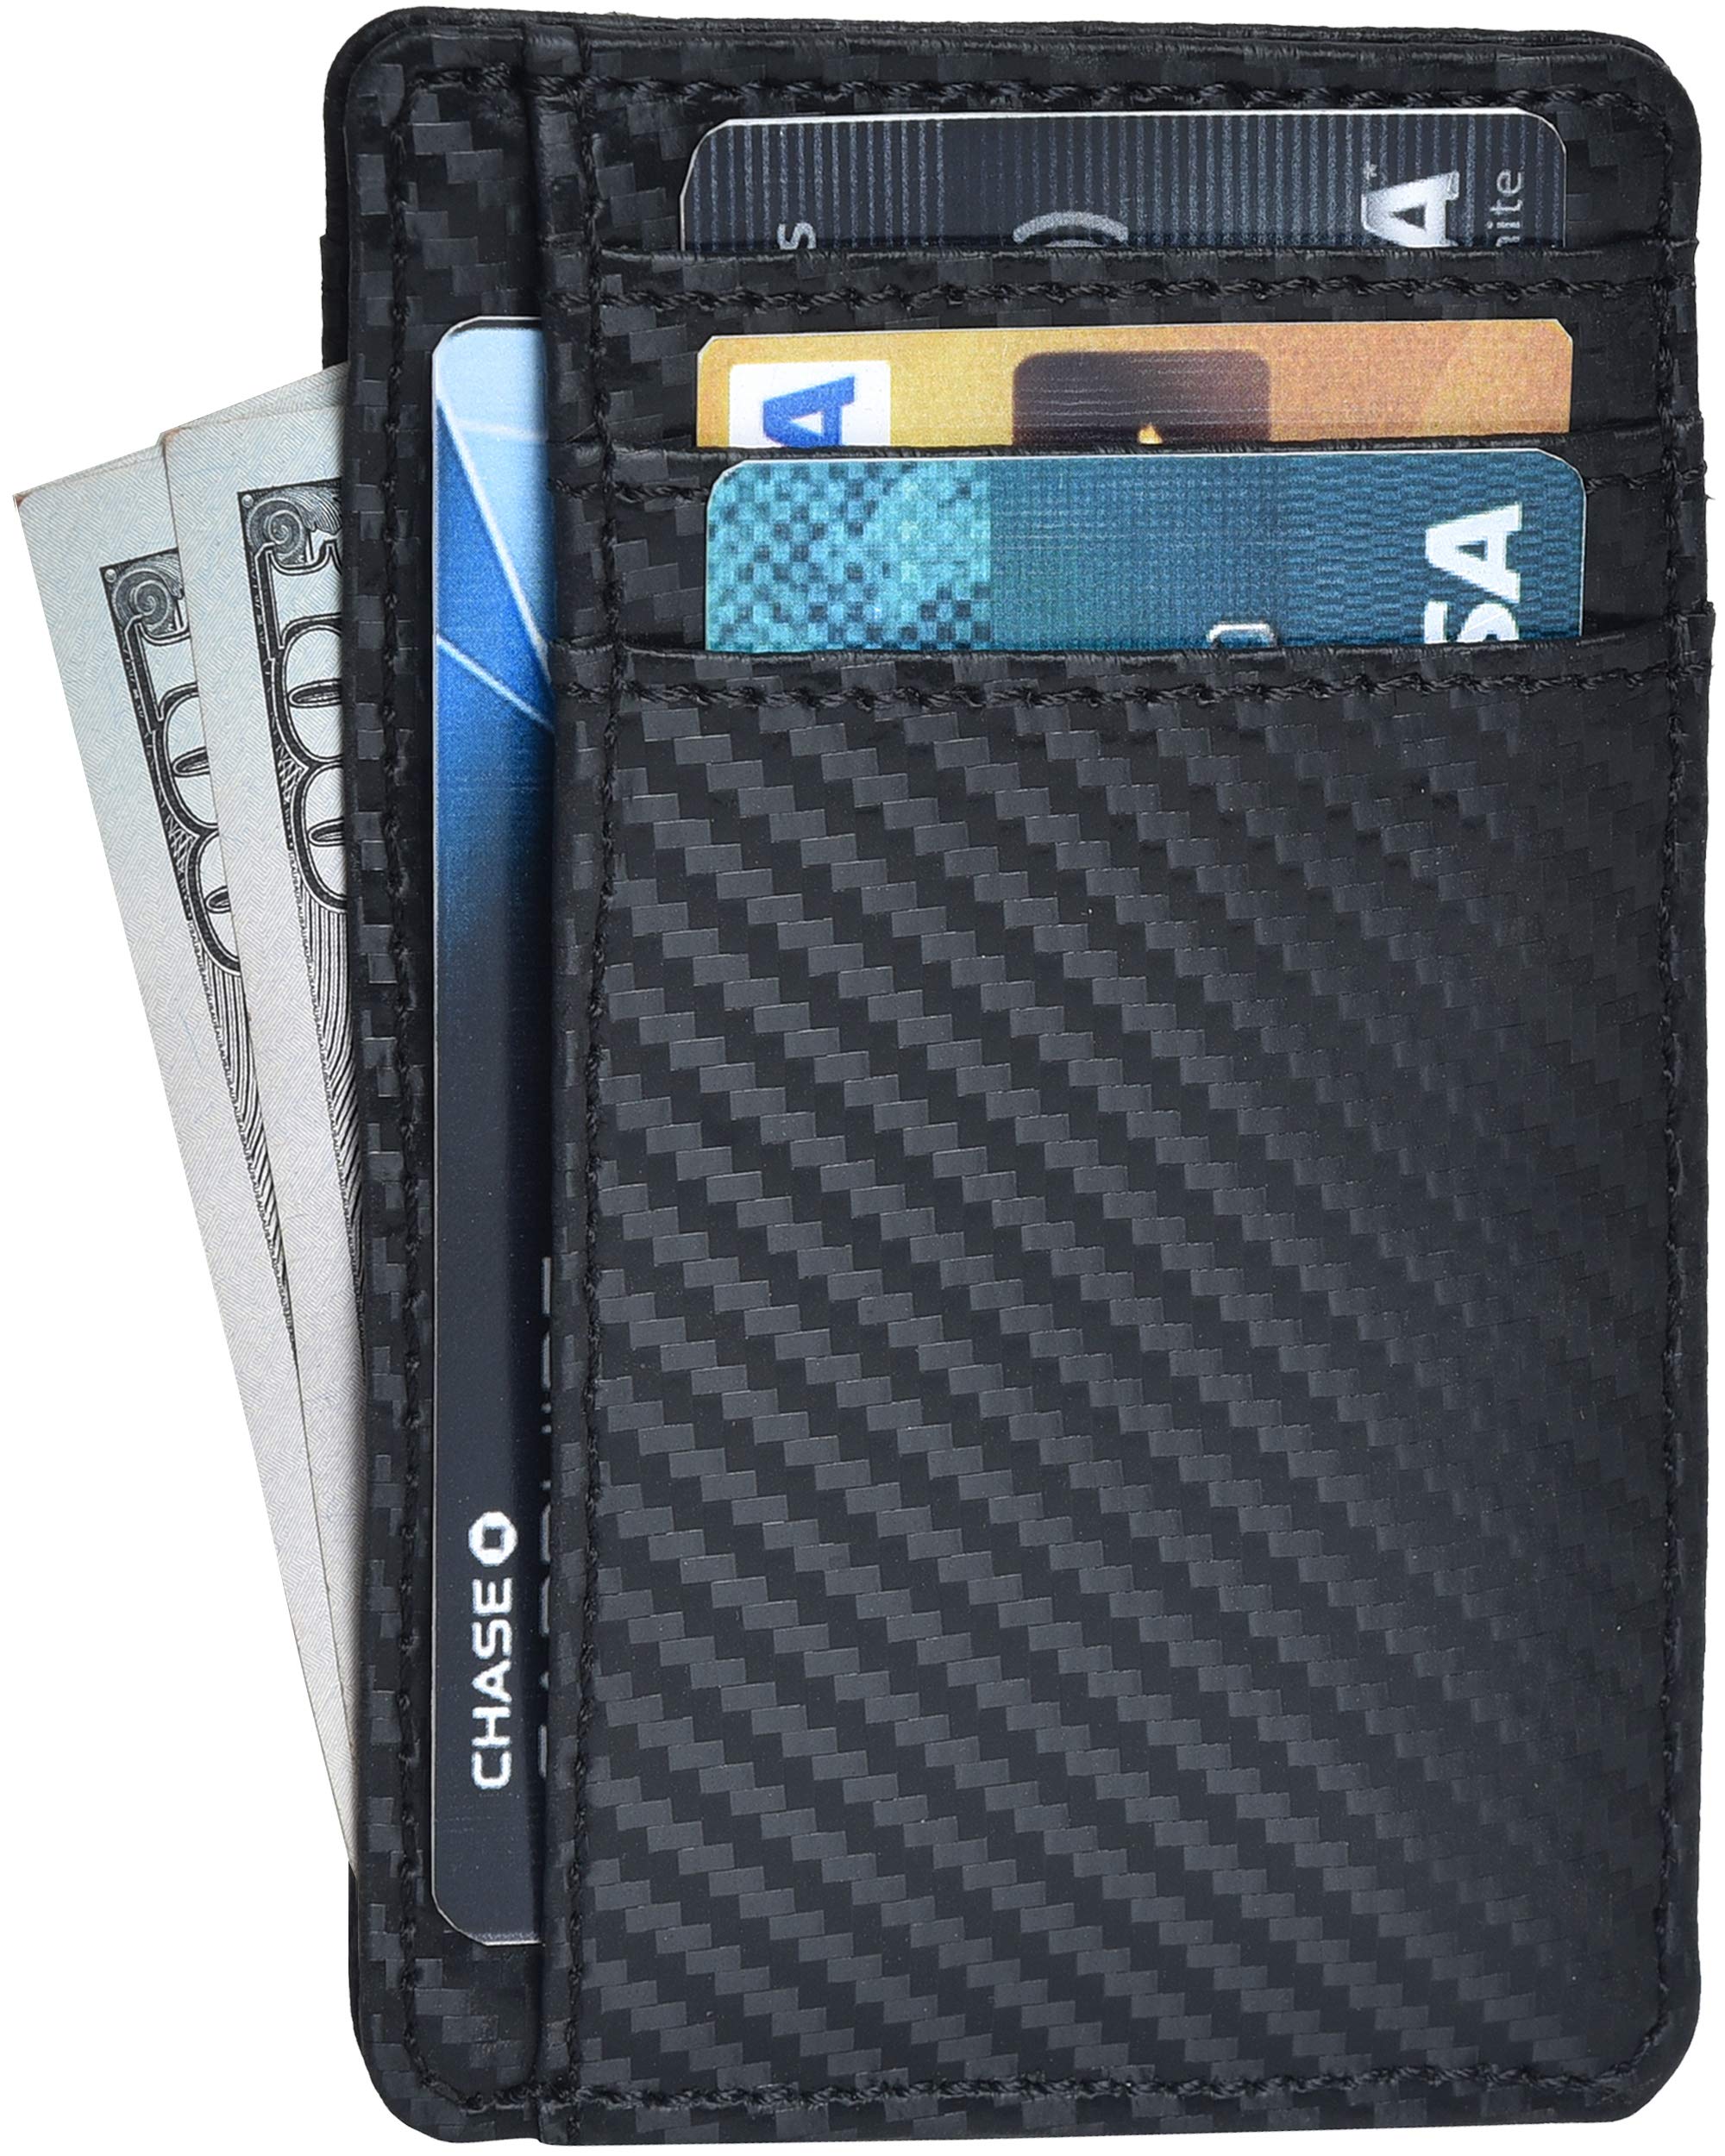 Oak Leathers Leather Wallet for Men & Women | Sleek | Black Carbon Fibre | Minimalist & Slim | Gifts For Him & Her| Multiple Credit Card & ID Slots